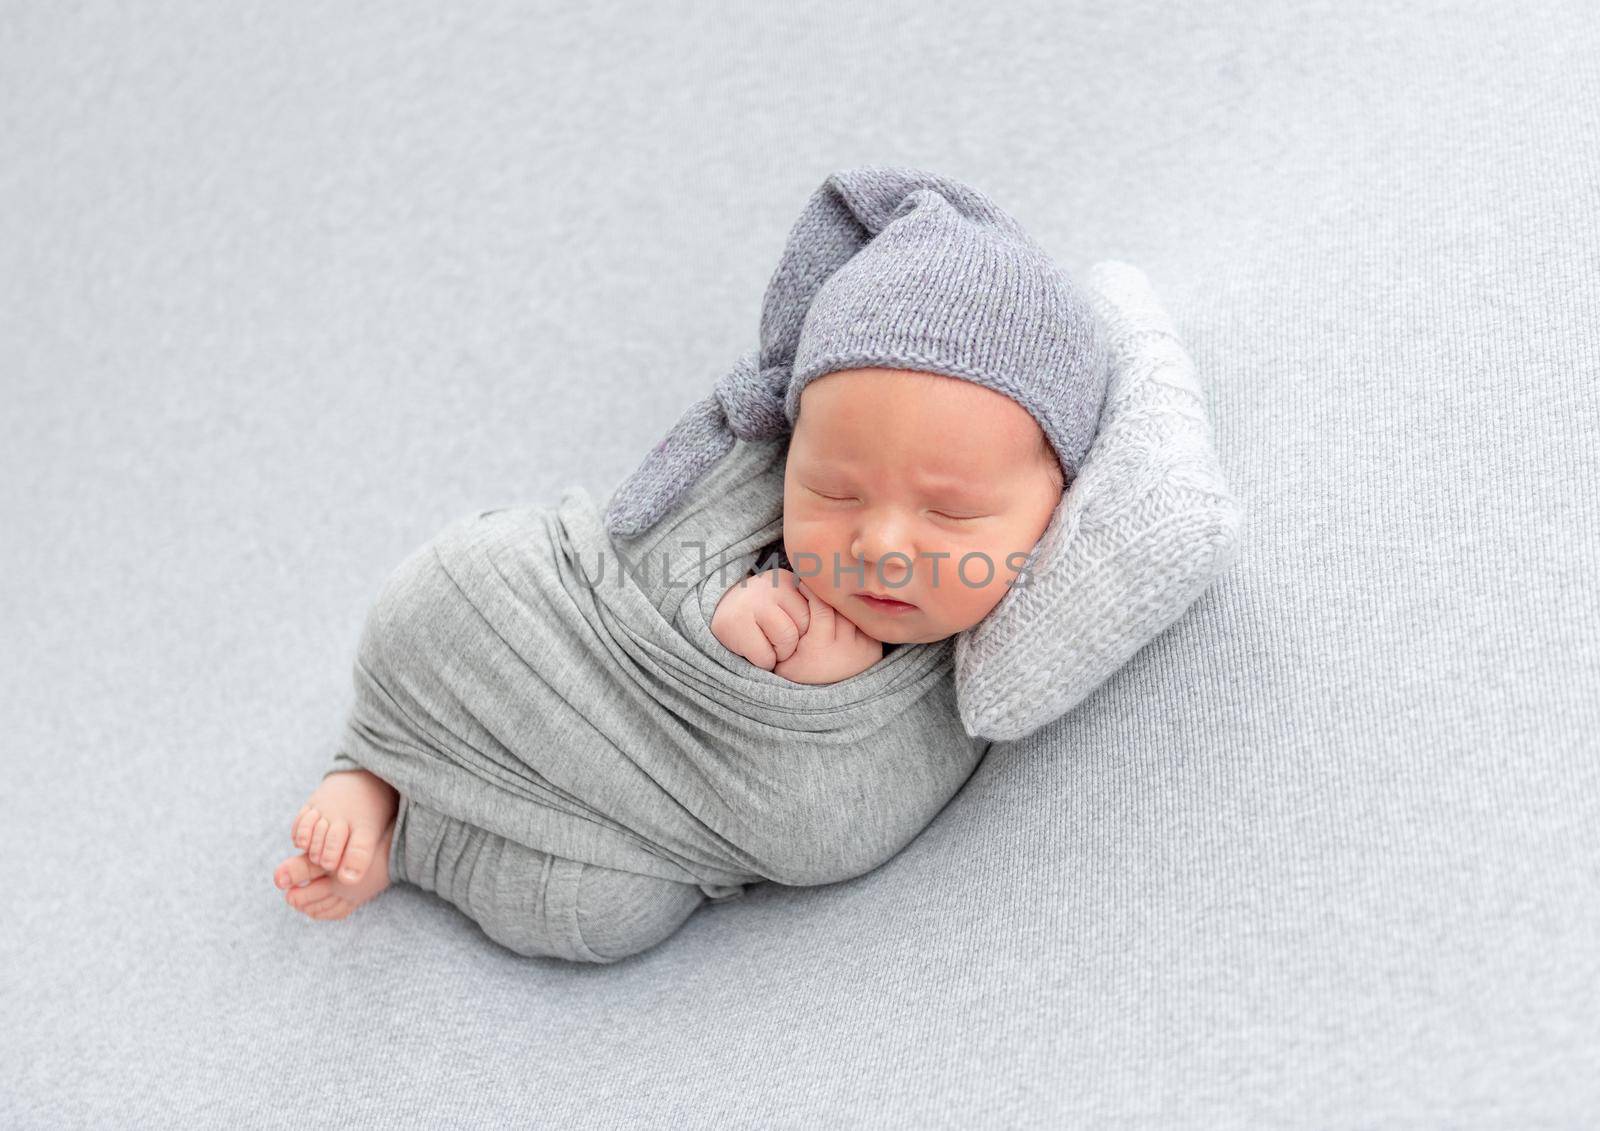 Adorable newborn resting on tiny pillow